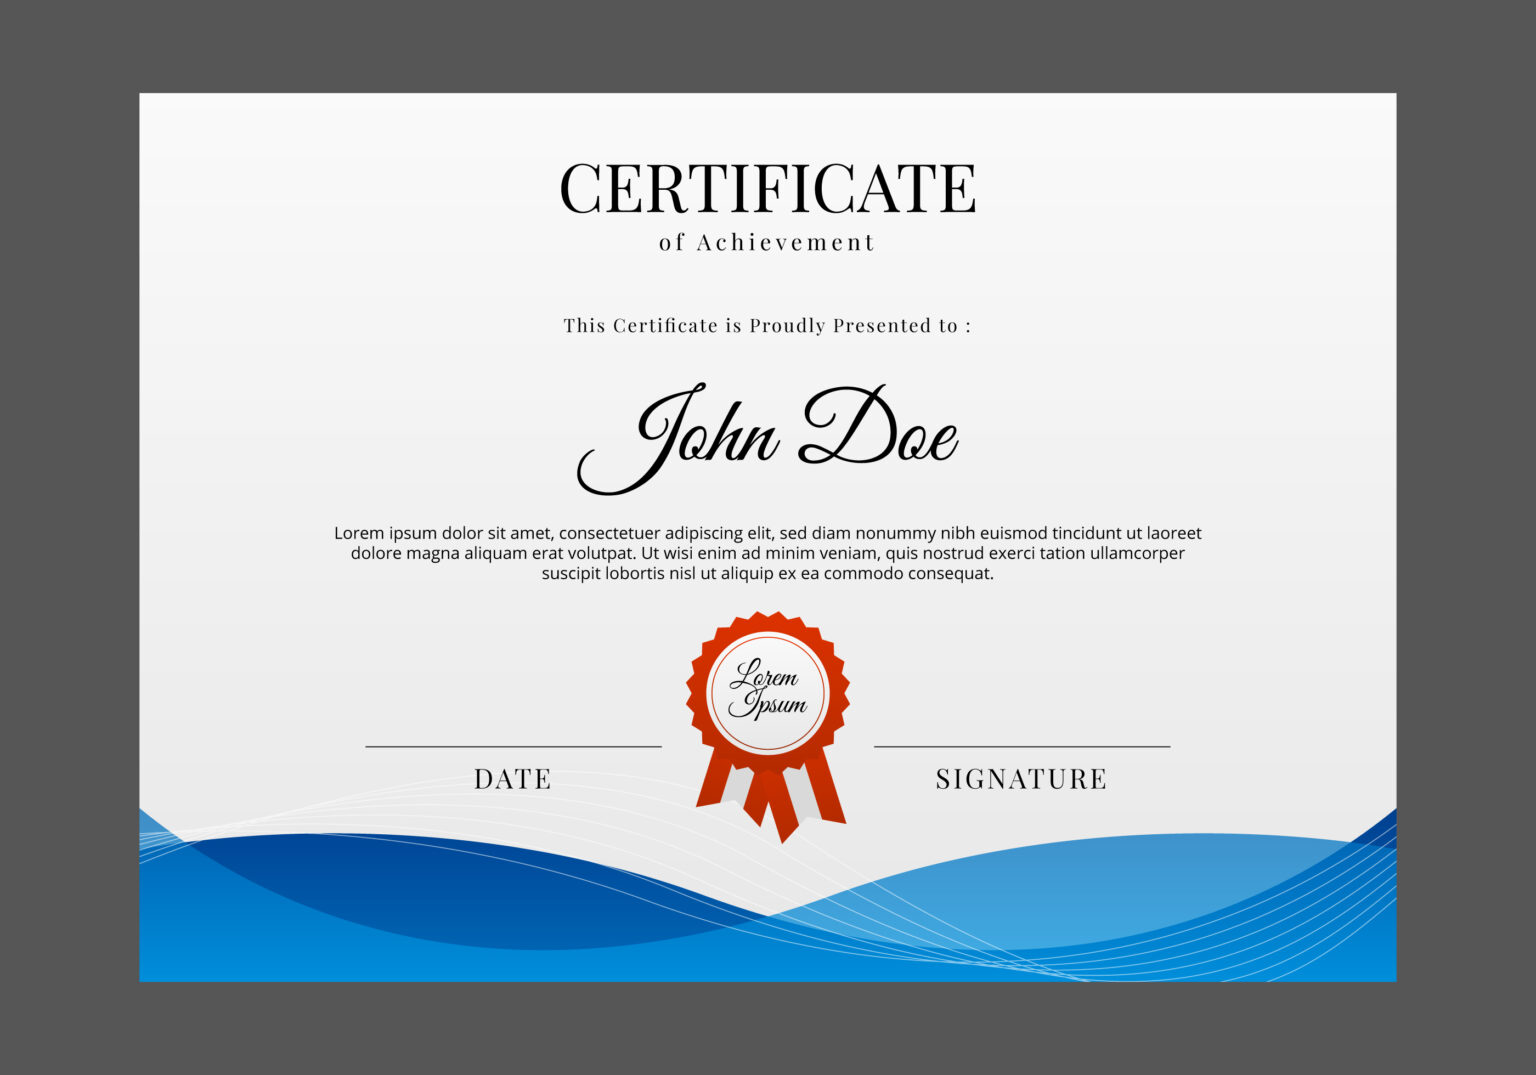 certificate-free-vector-art-10-109-free-downloads-in-certificate-of